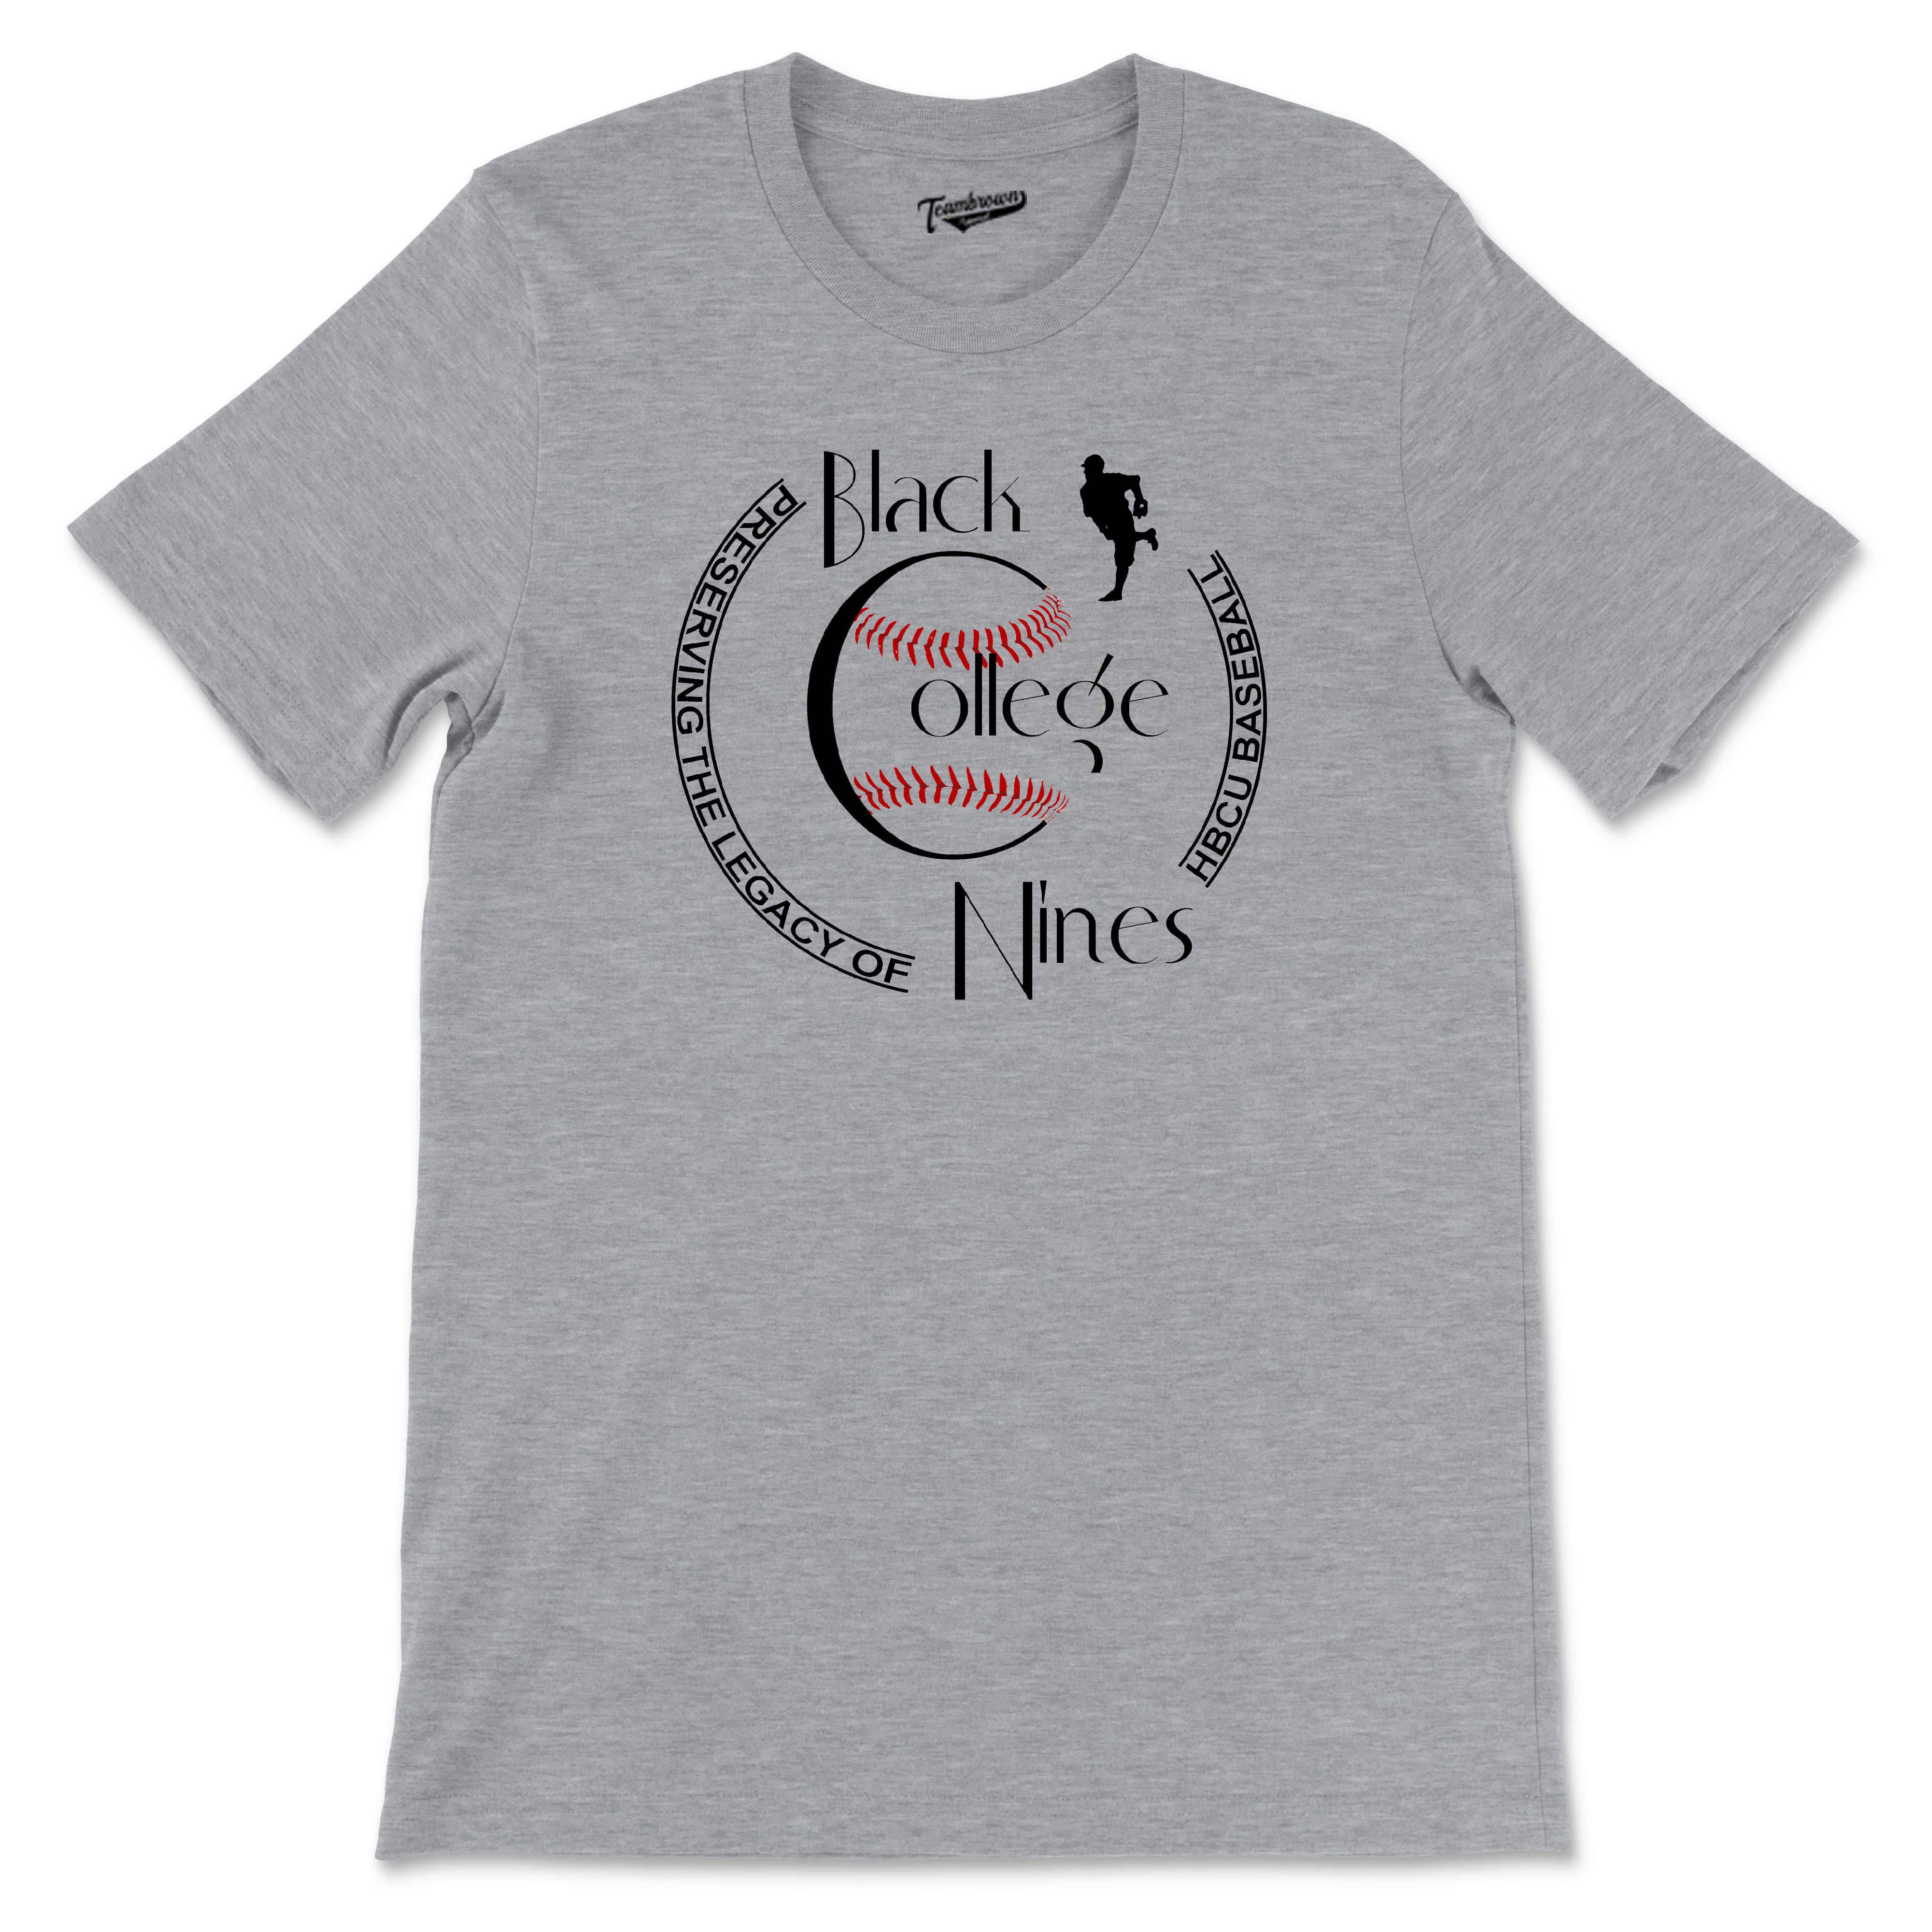 Black College Nines - Unisex T-Shirt